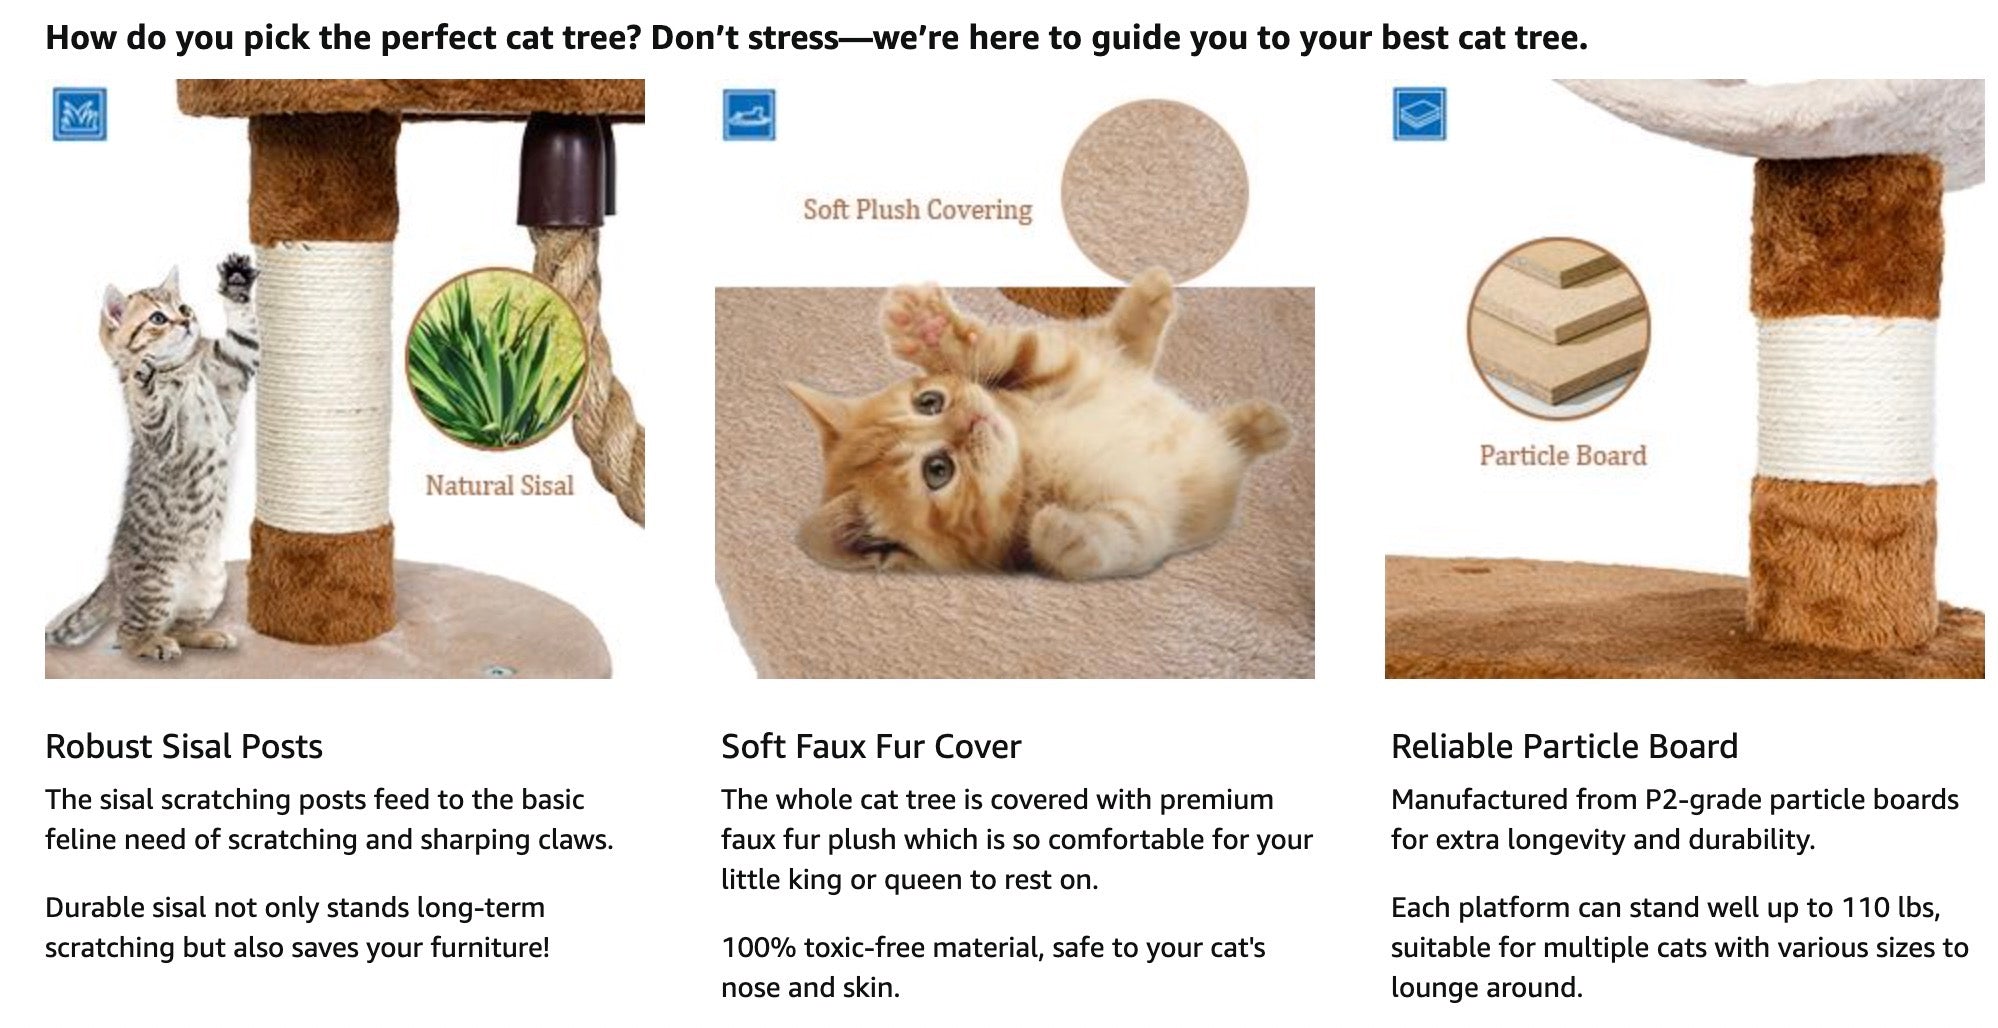 AsyPets Cat Tree 50” Multi-Level Pet Furniture